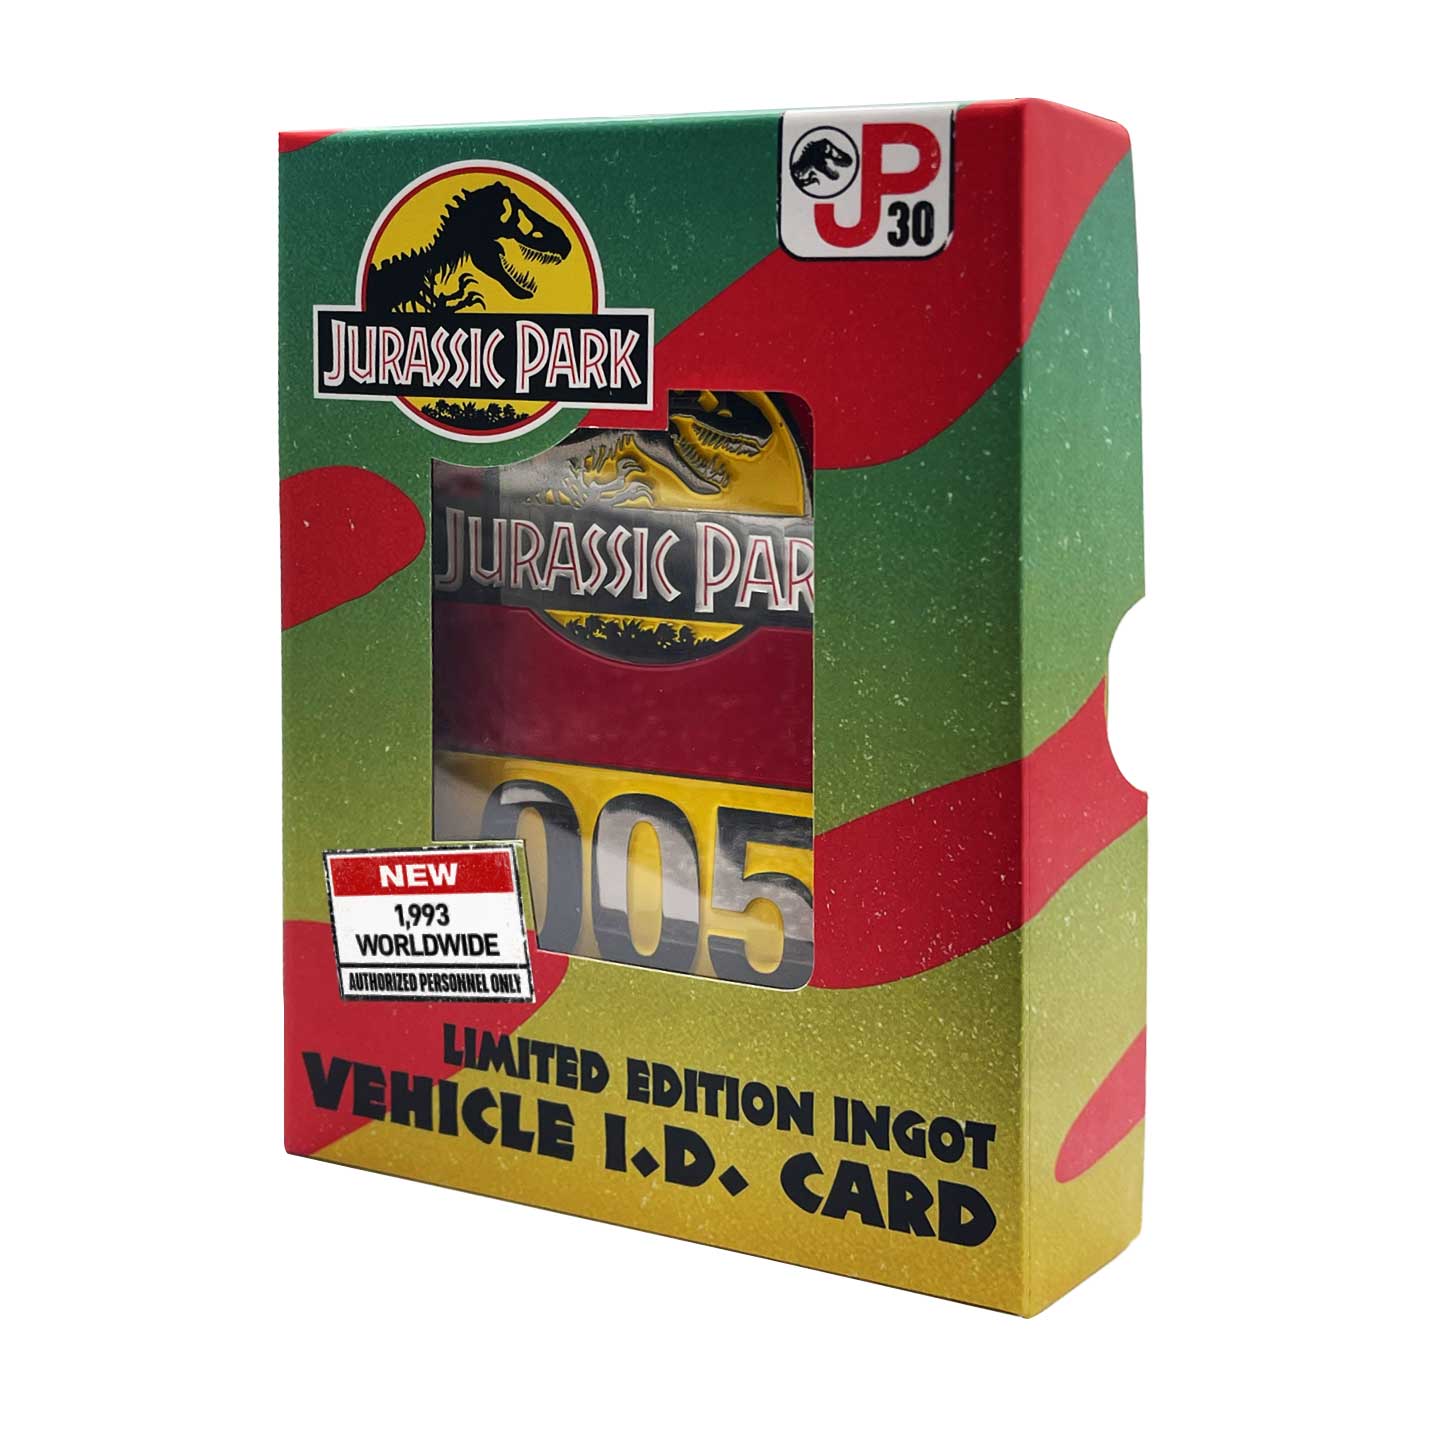 Jurassic Park Limited Edition 30th Anniversary Replica Vehicle I.D Ingot